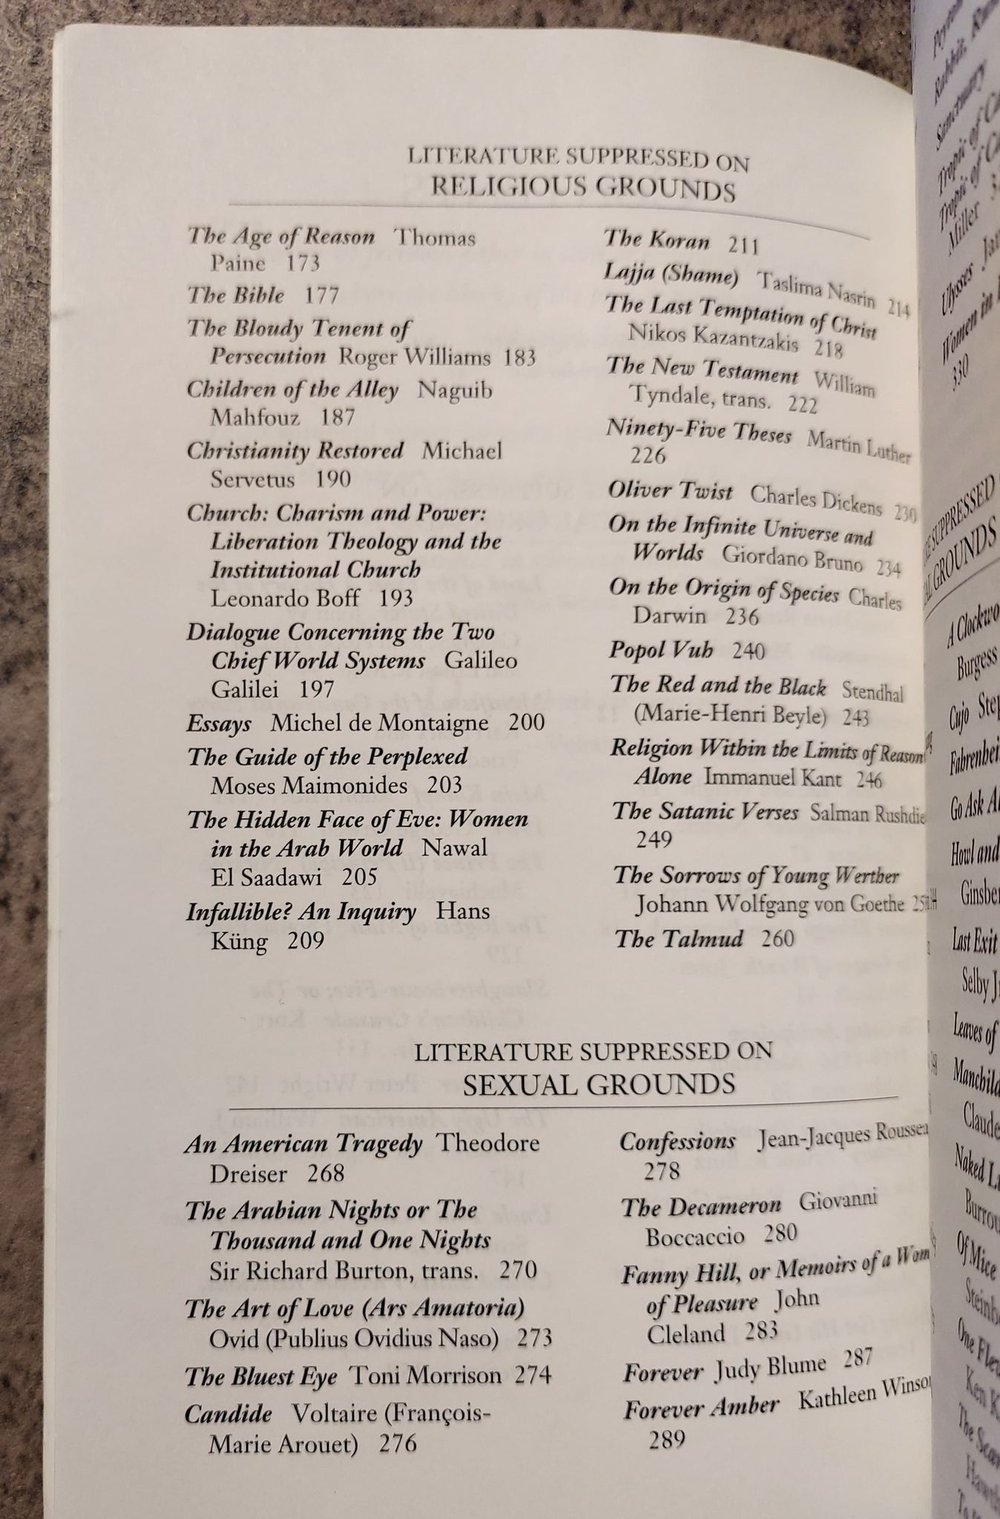 100 Banned Books: Censorship Histories of World Literature, by Nicholas J. Karolides